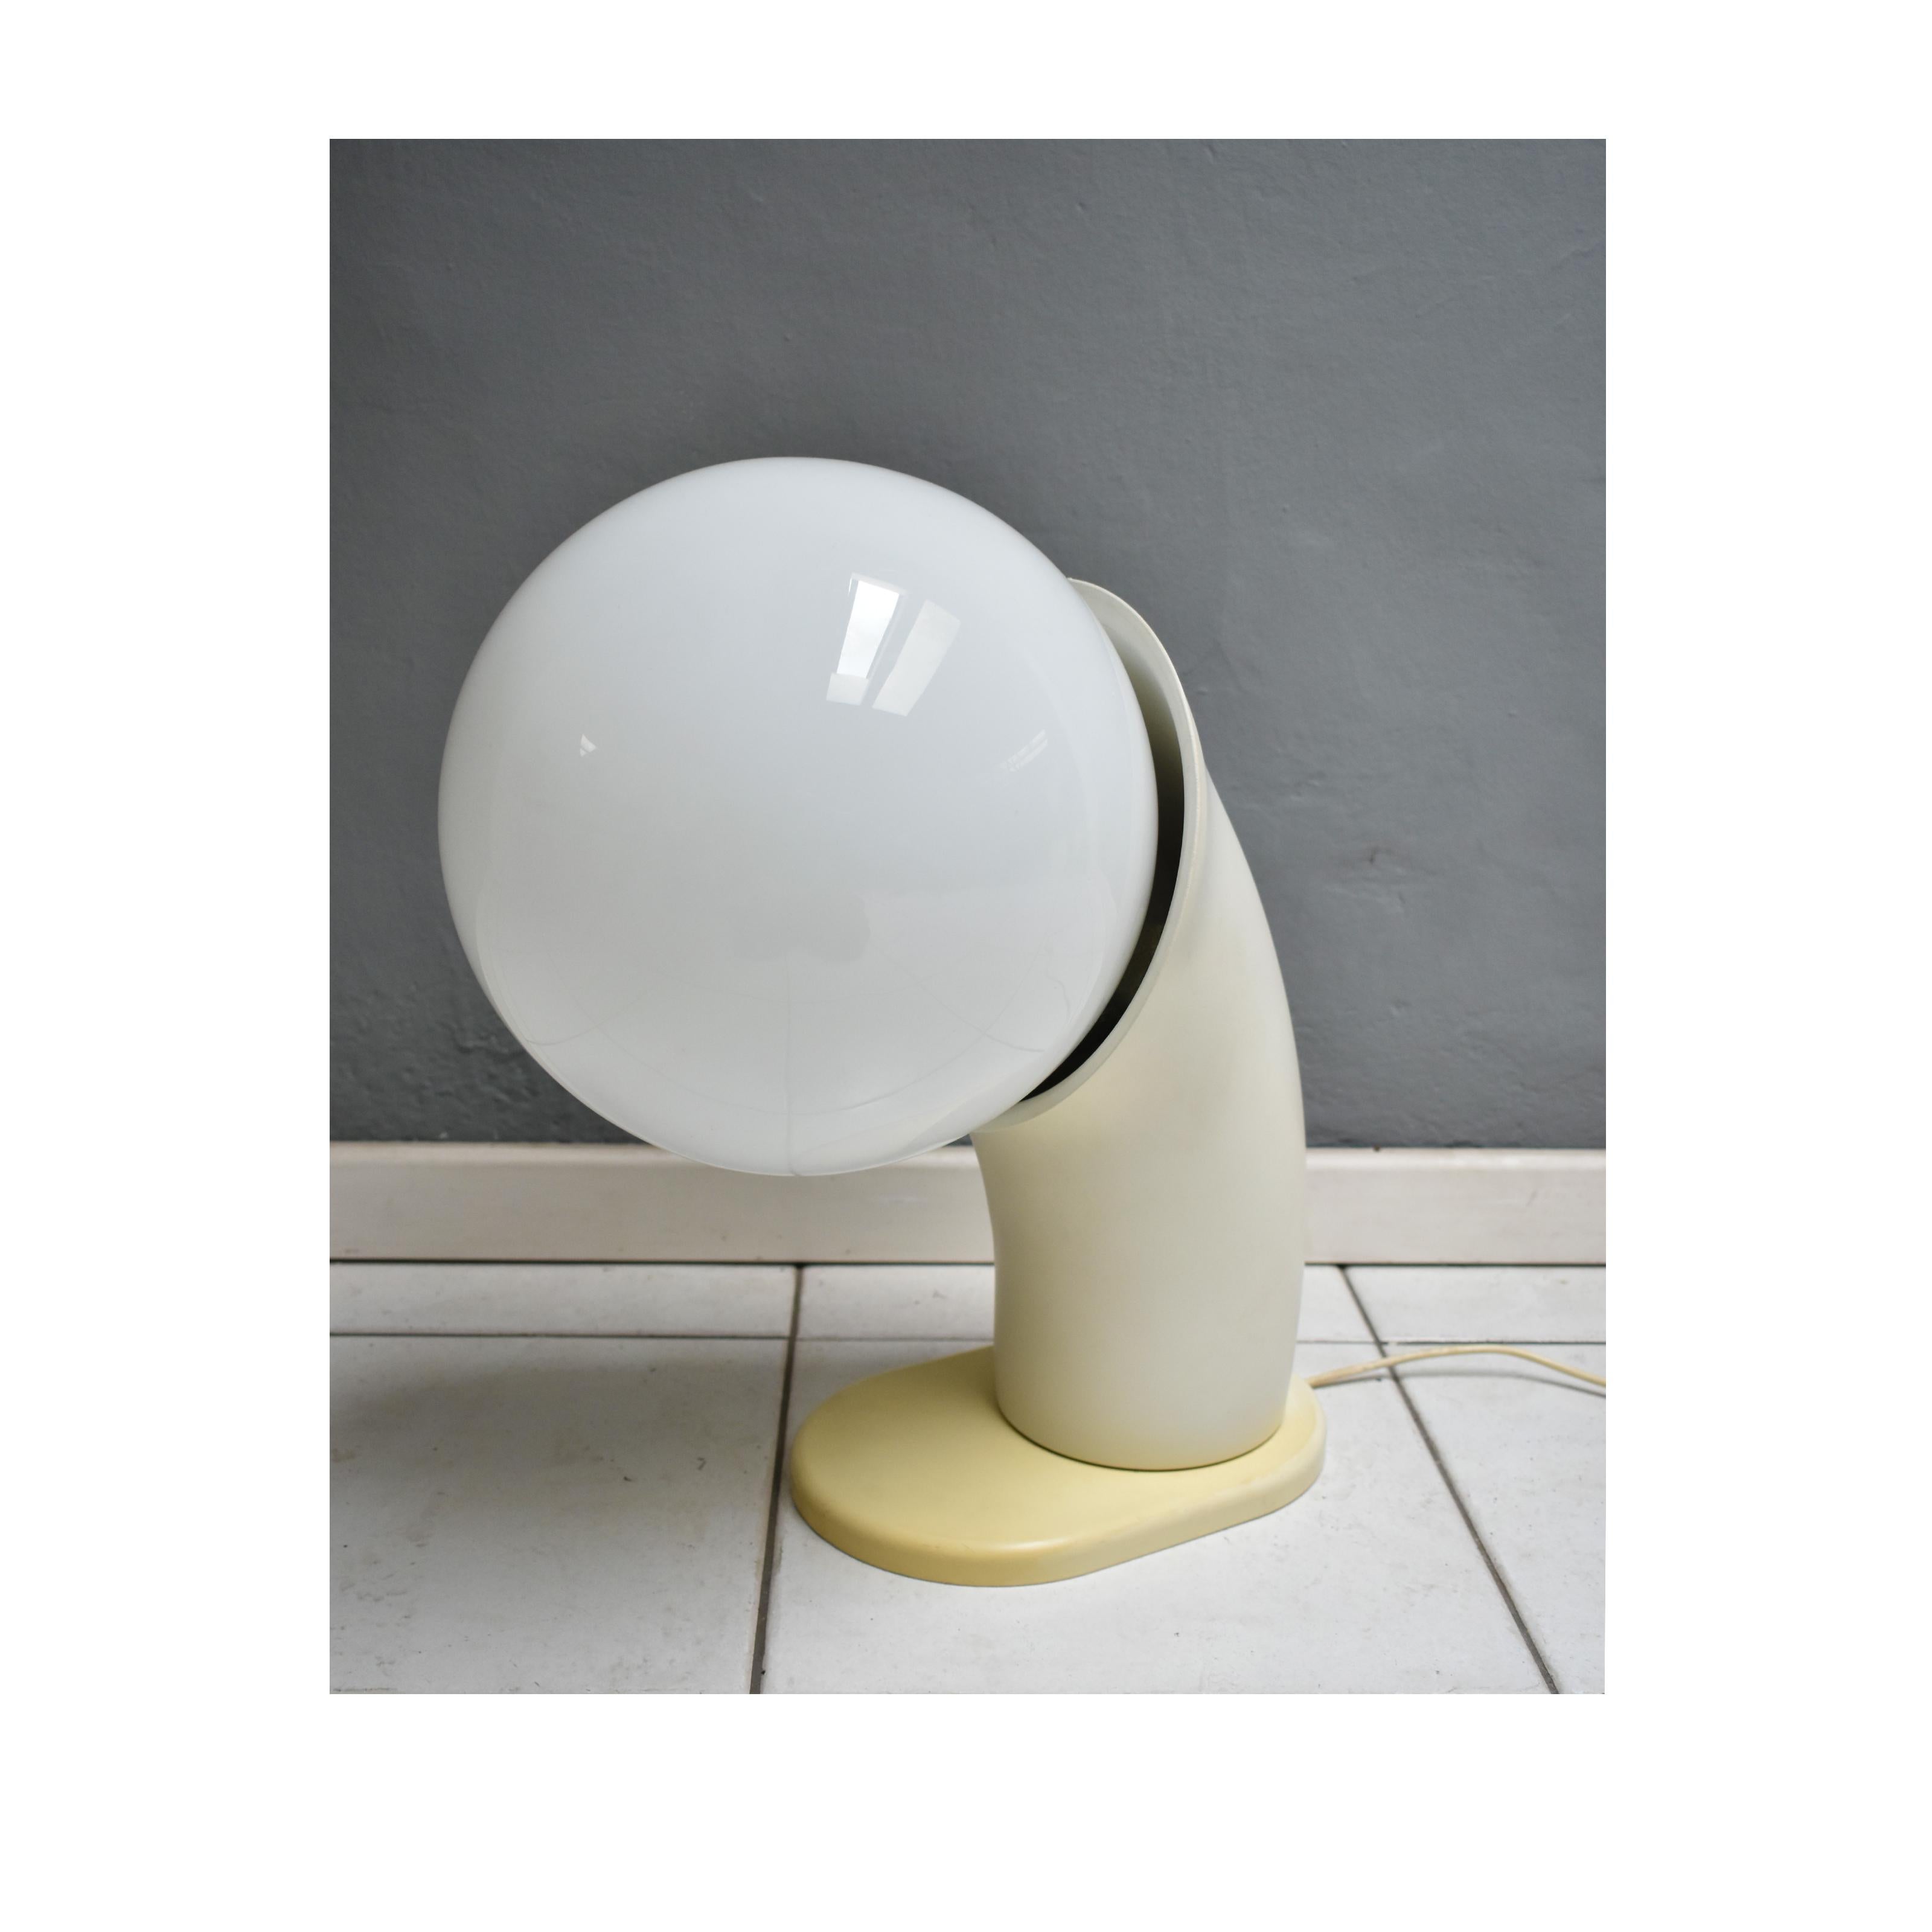 Late 20th Century Mid-Century Modern Italian, 1970s Italian Lamp with Spherical Diffuser